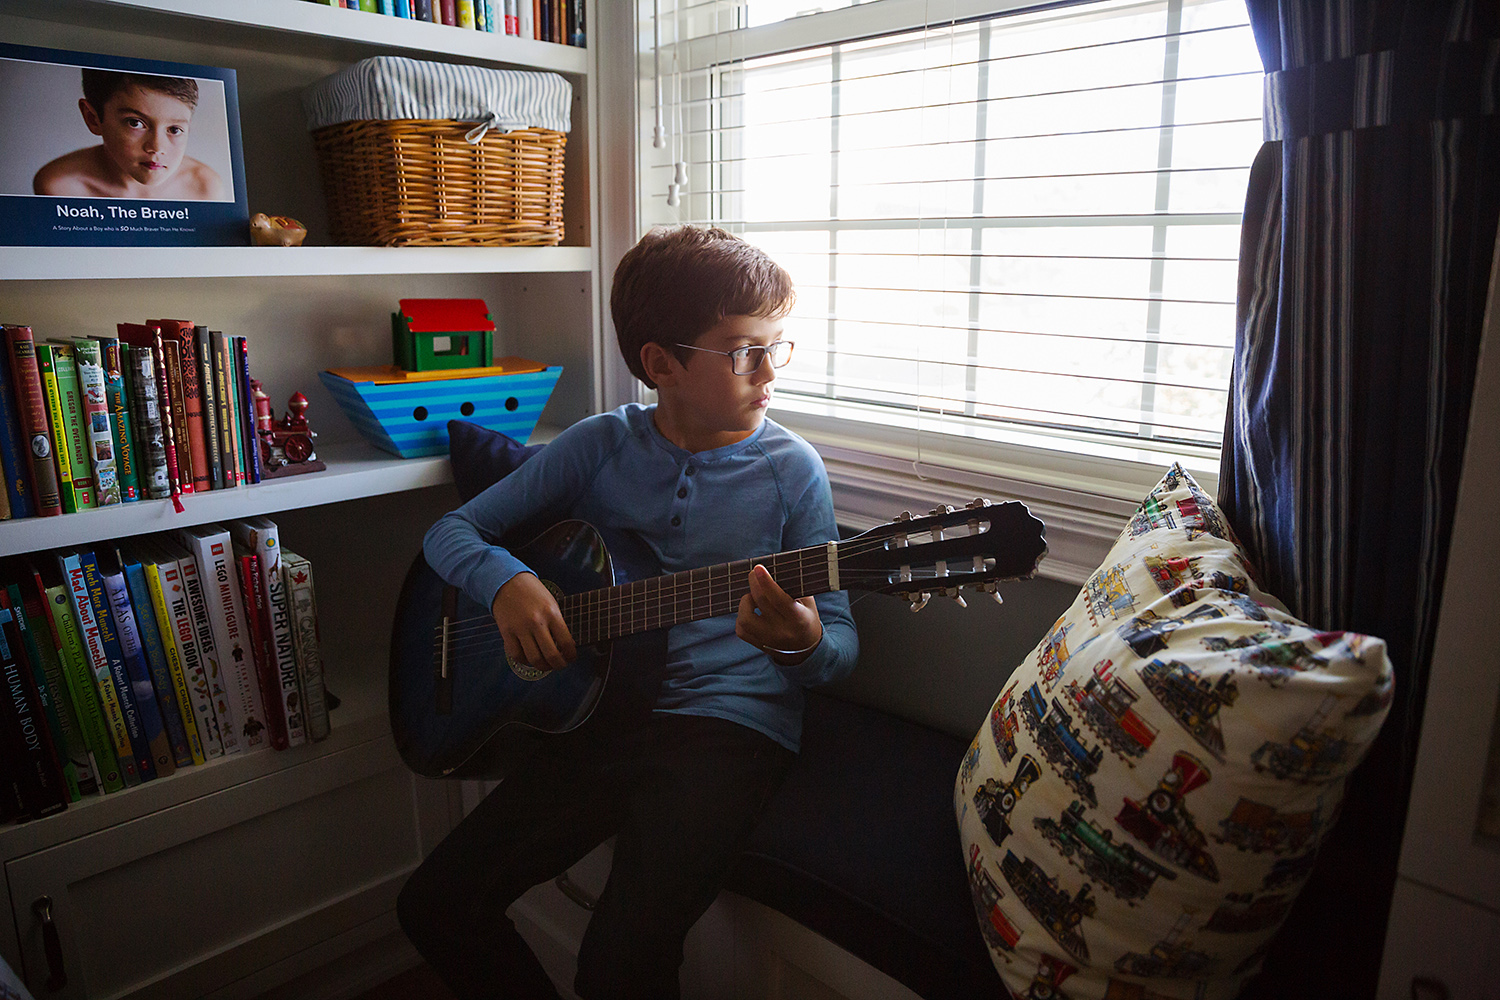 Tween boy playing his guitar on a window seat